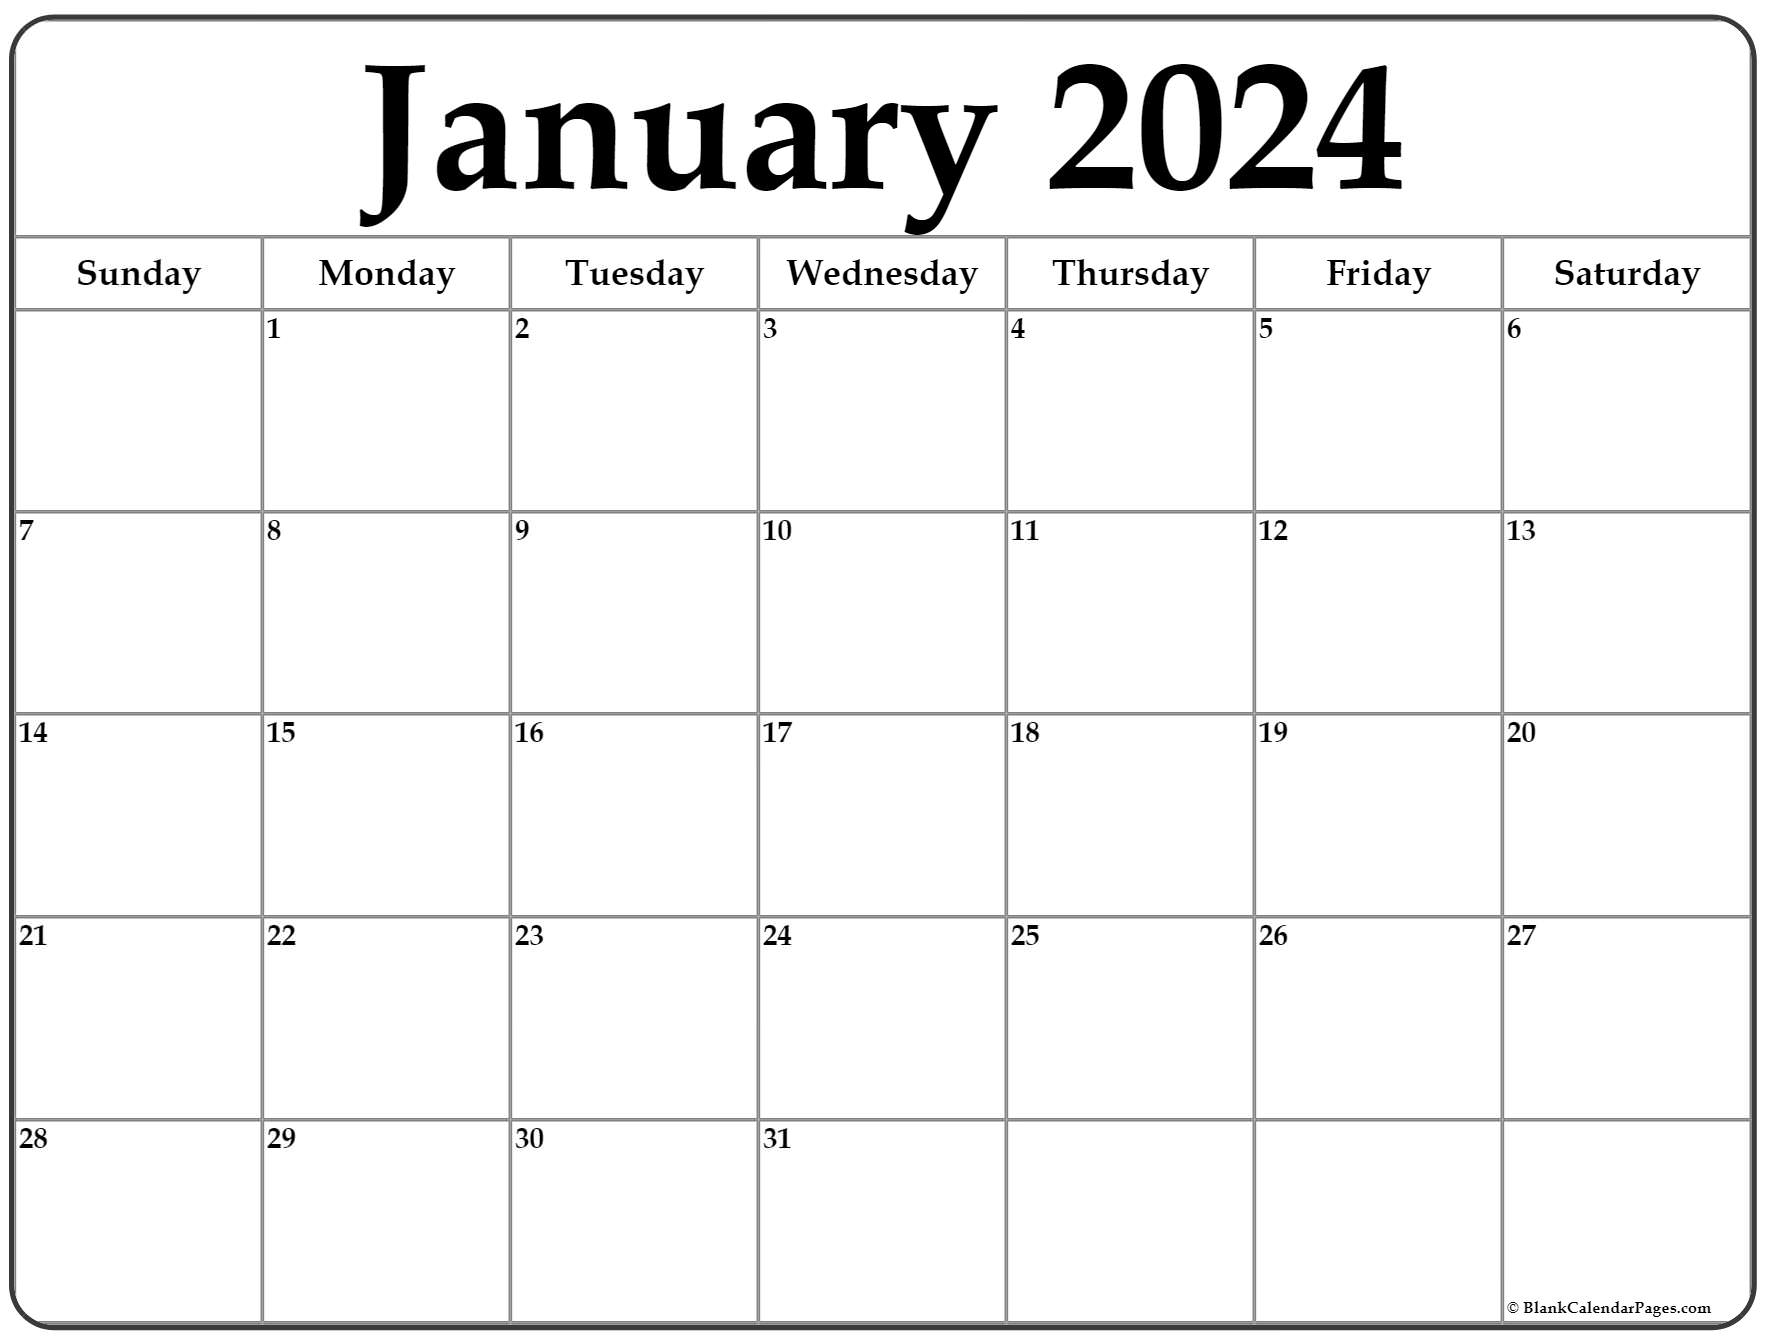 January 2024 Calendar | Free Printable Calendar for 2024 Calendar Printable Free Monthly